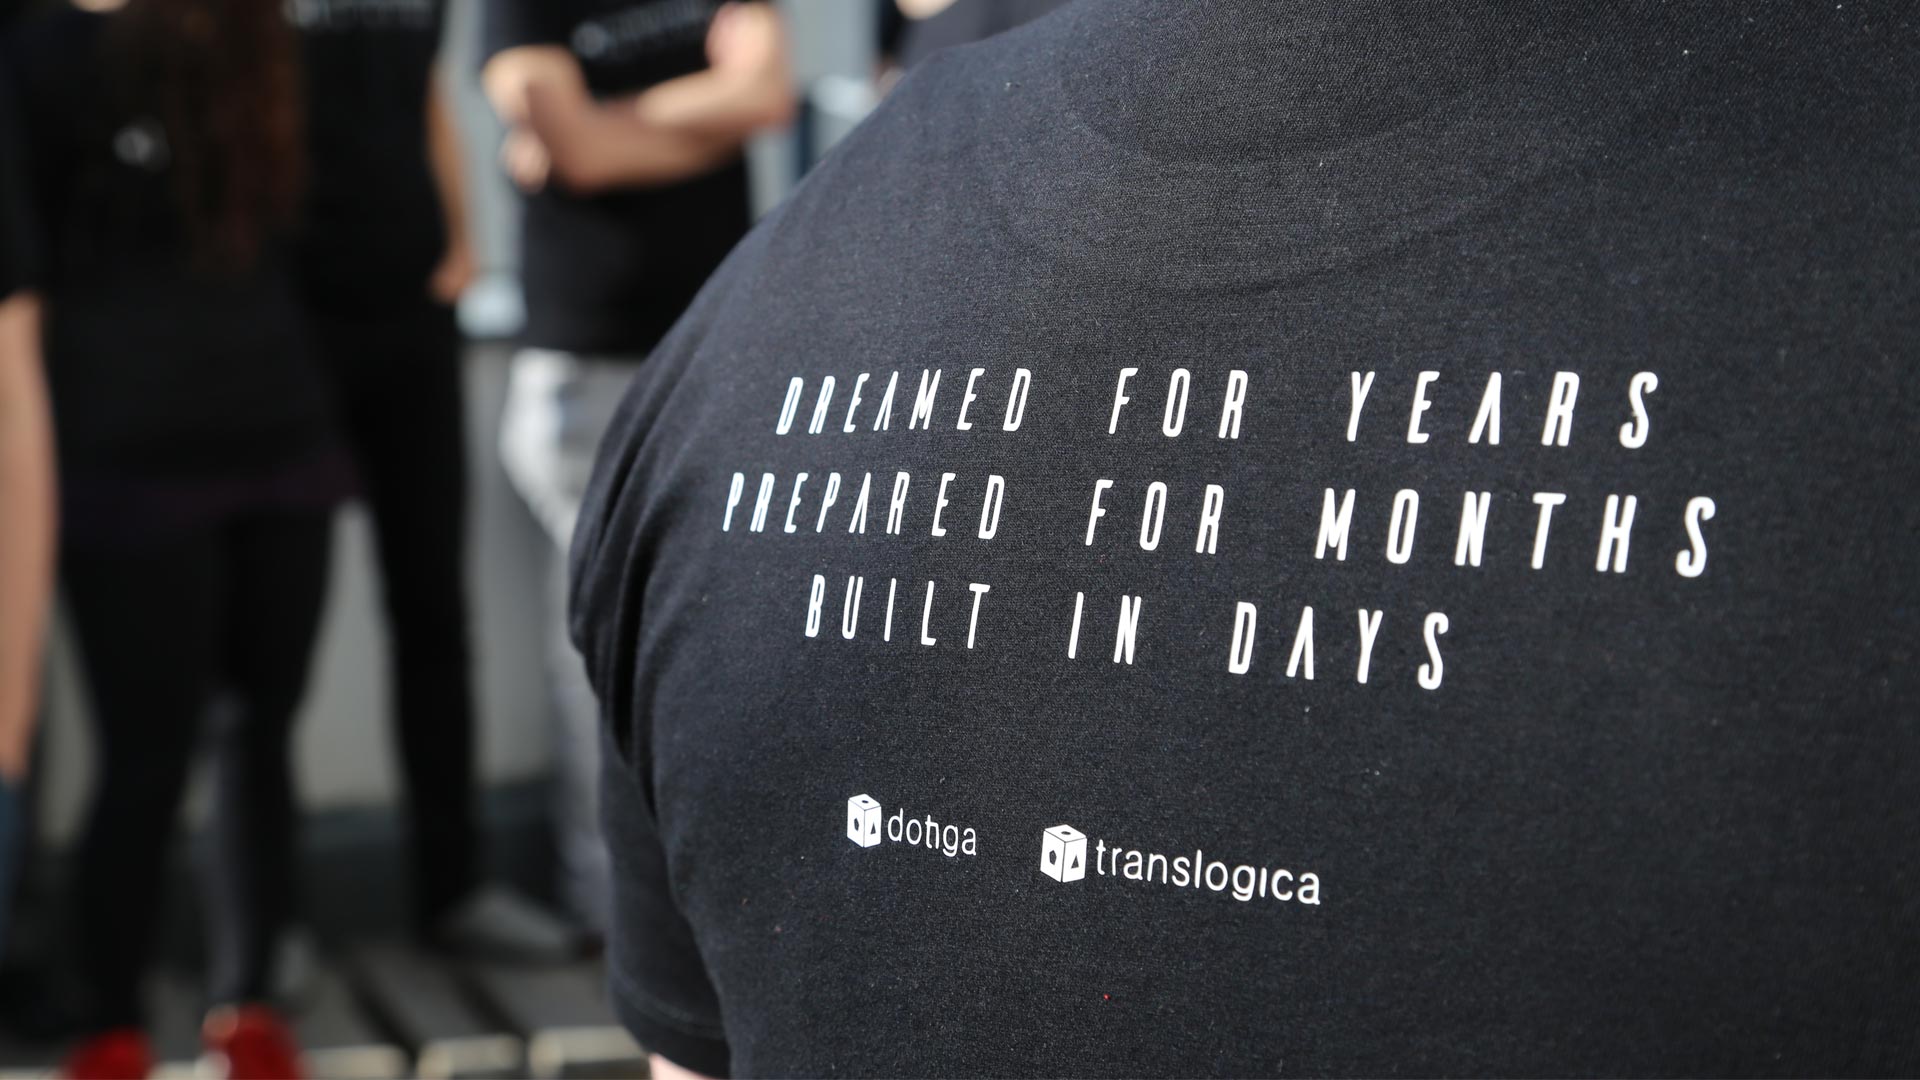 Impression vom Translogica Hackathon unter dem Motto "Dreamed for years, prepared for months, built in days"